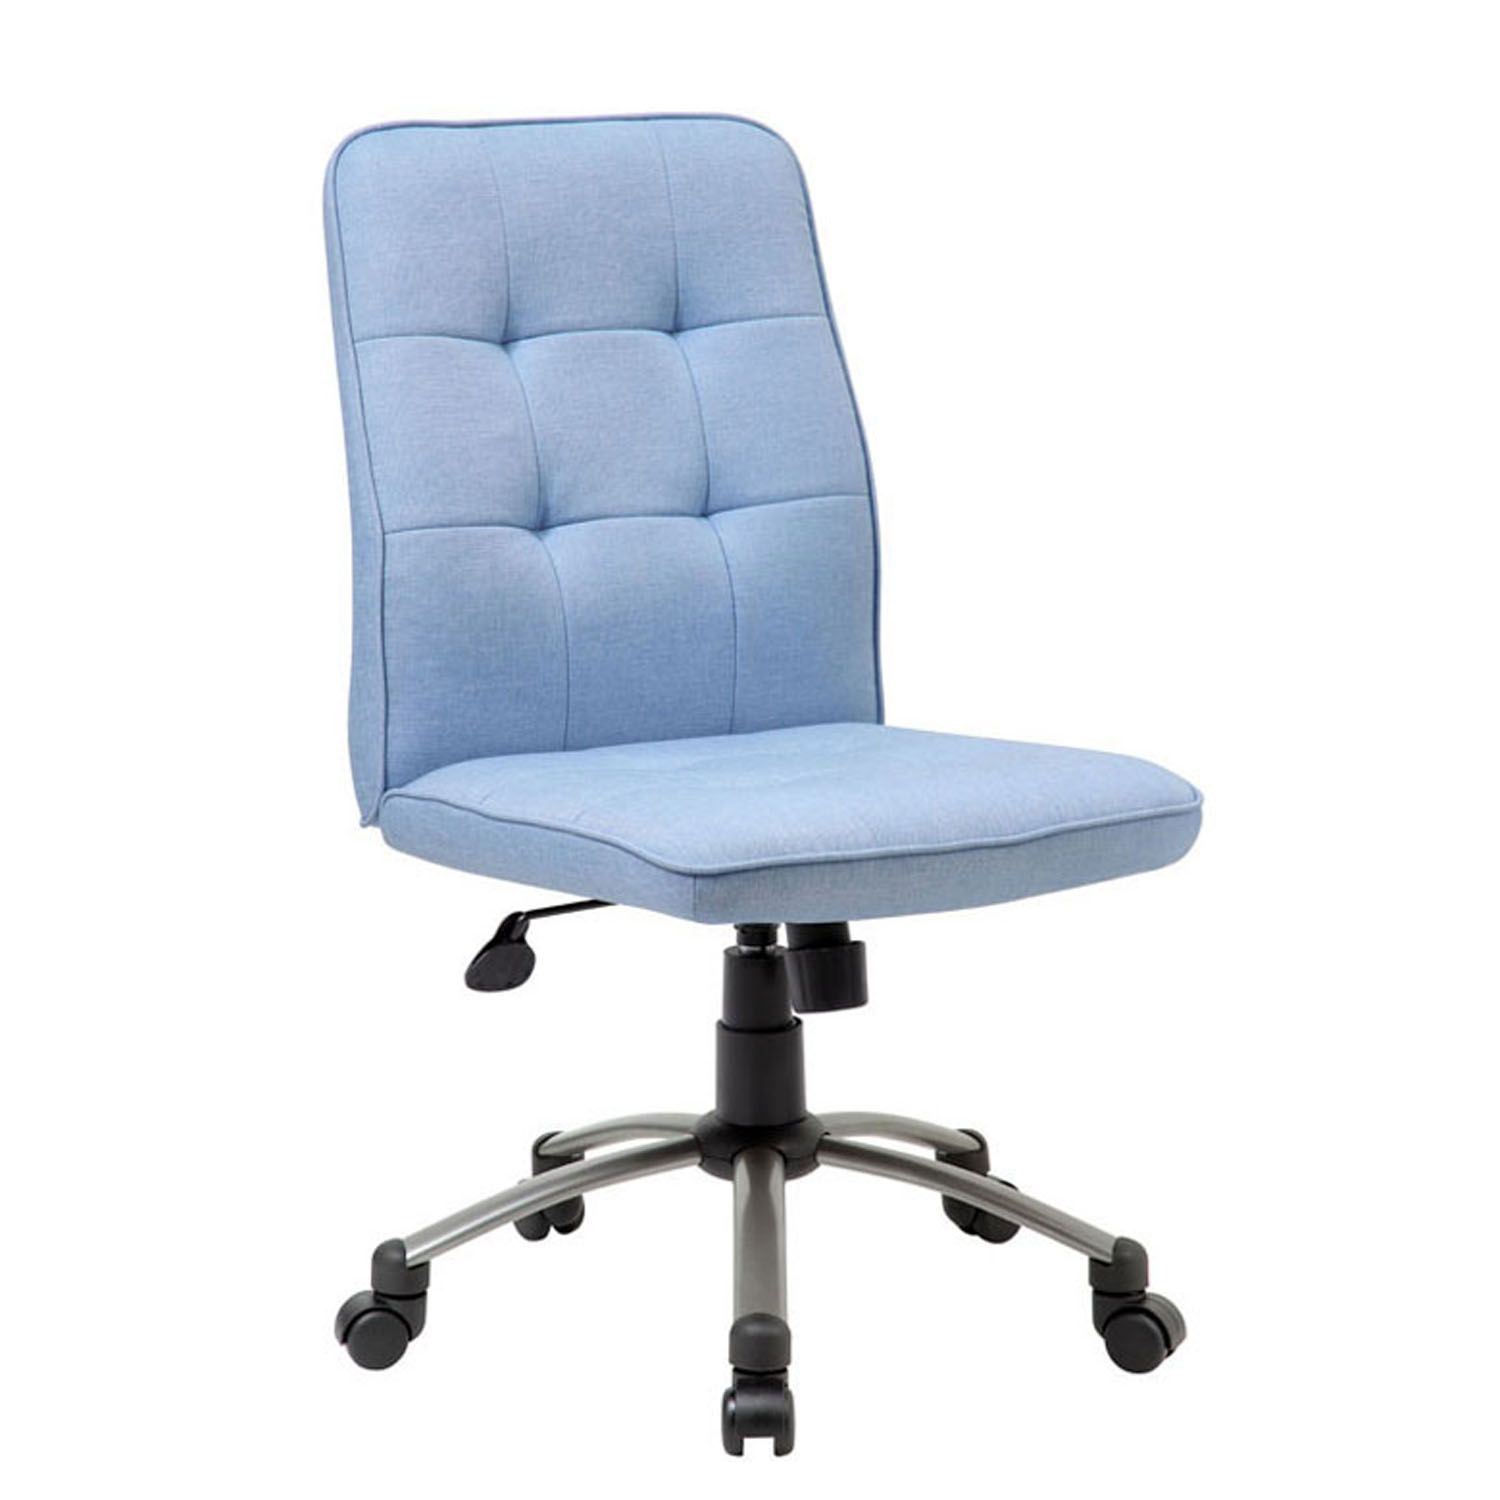 Light Blue Desk Chair Punkie